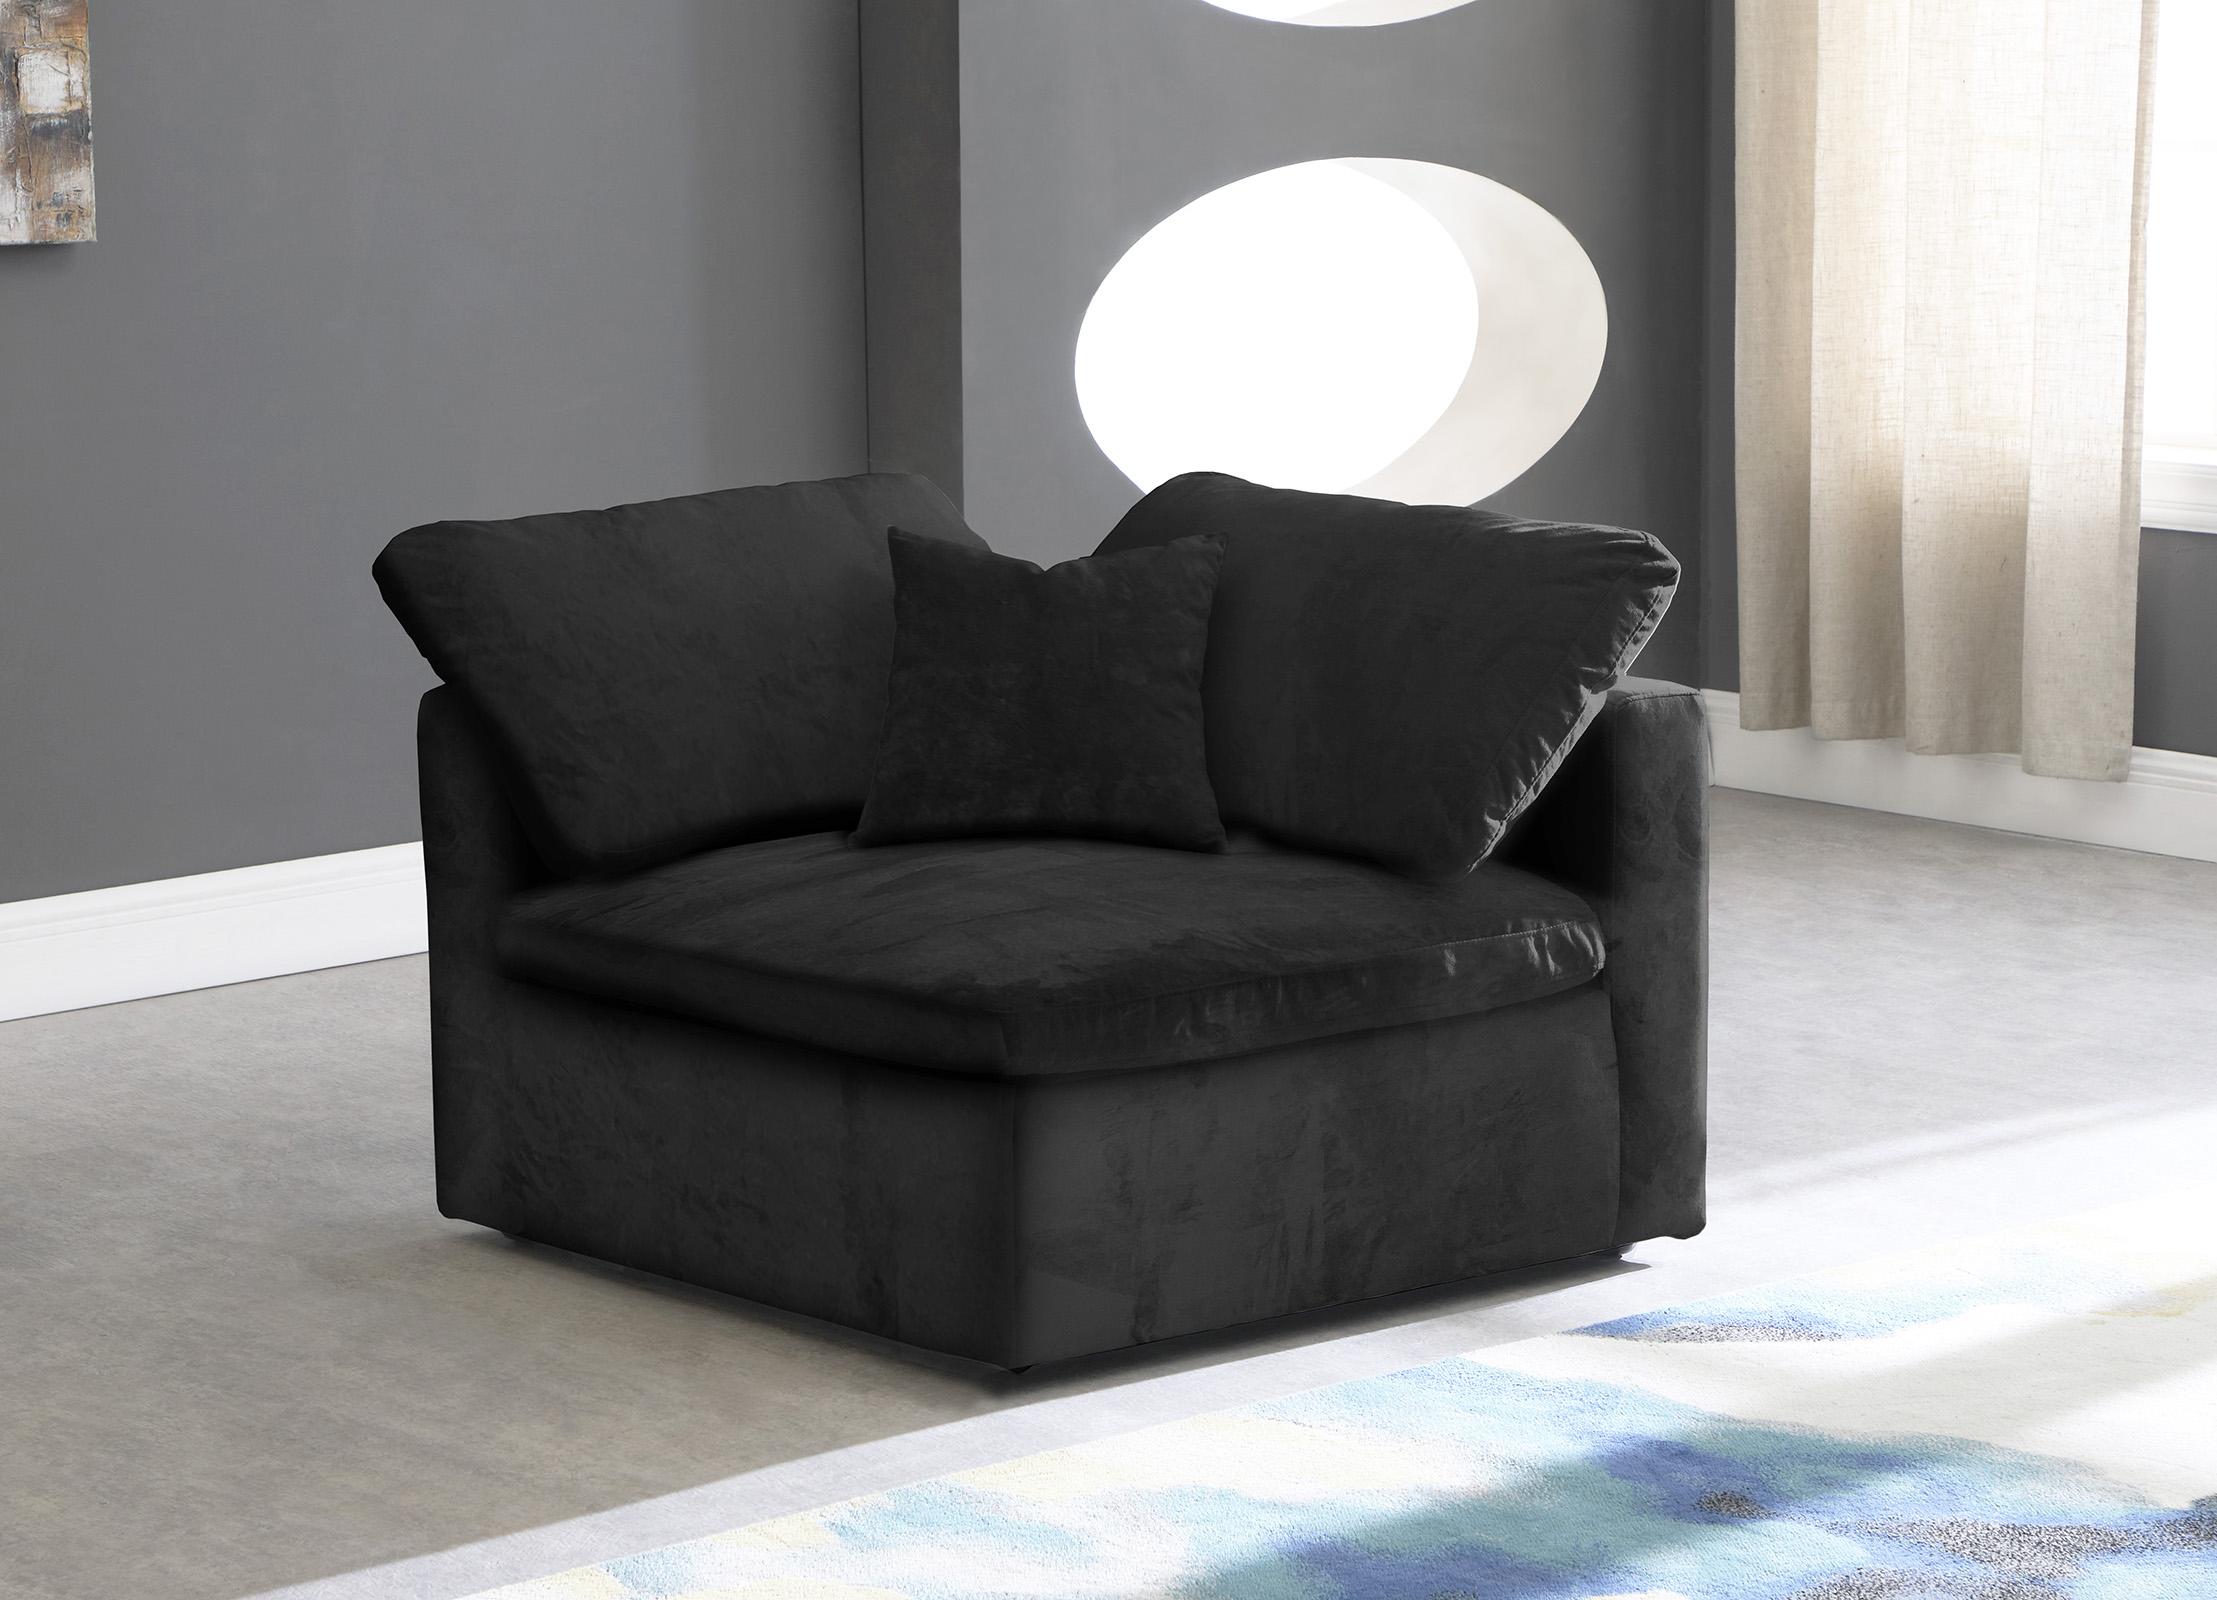 

    
Cozy Black Velvet Modular Fiber Filled Comfort Overstuffed Corner Chair Meridian
